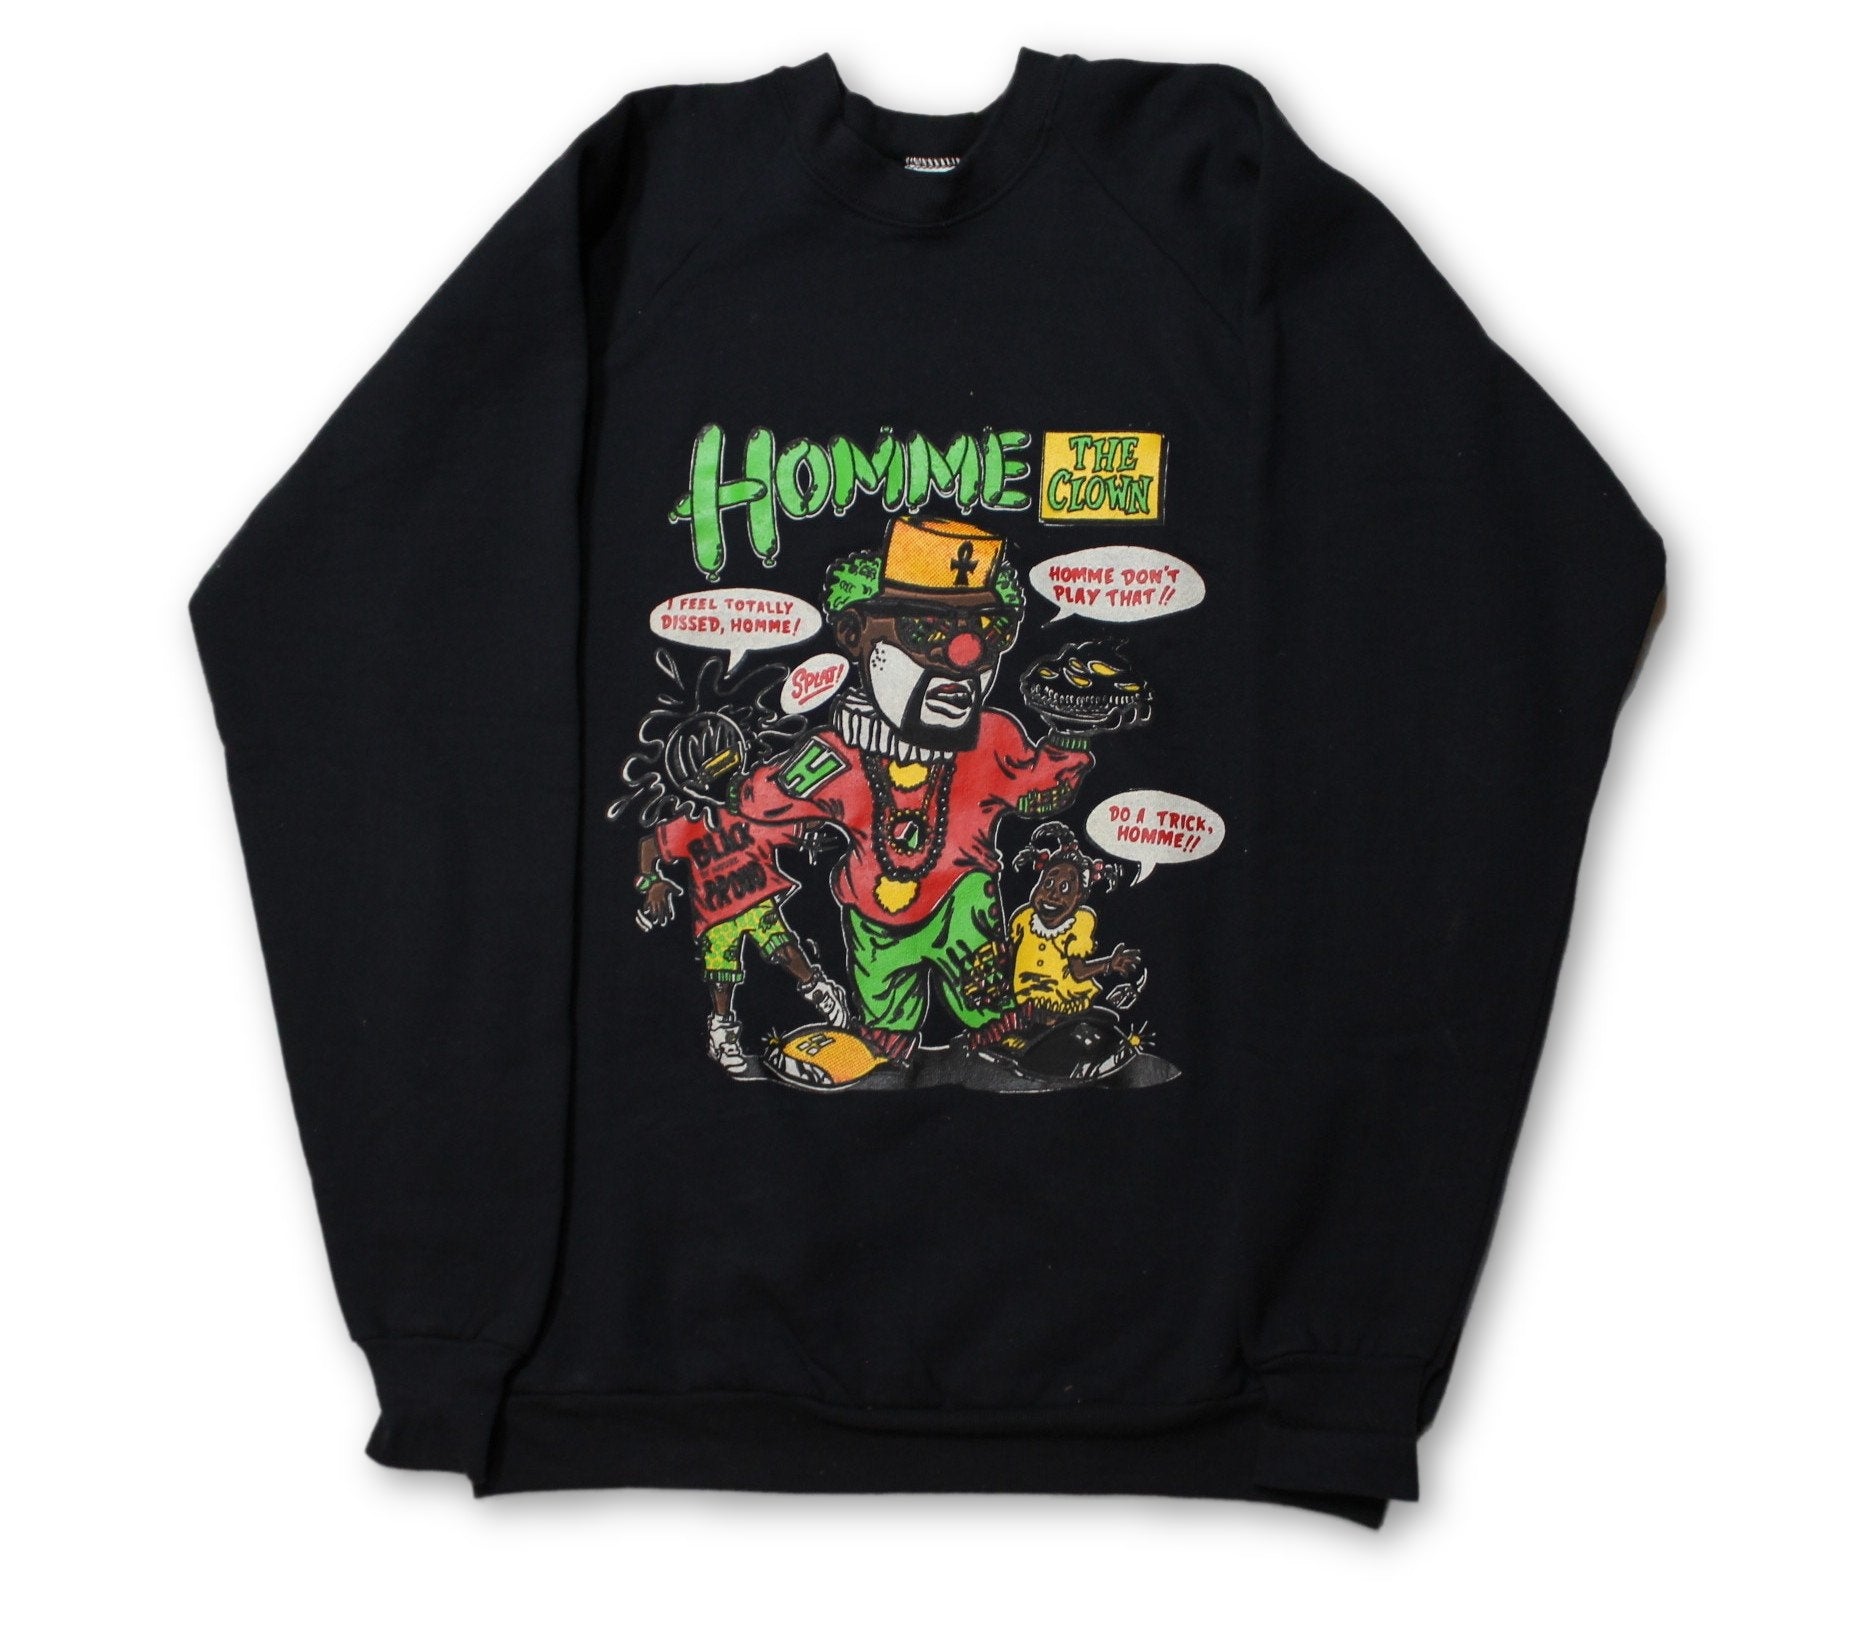 Vintage Homey D. Clown "Homme Print" Sweatshirt - jointcustodydc